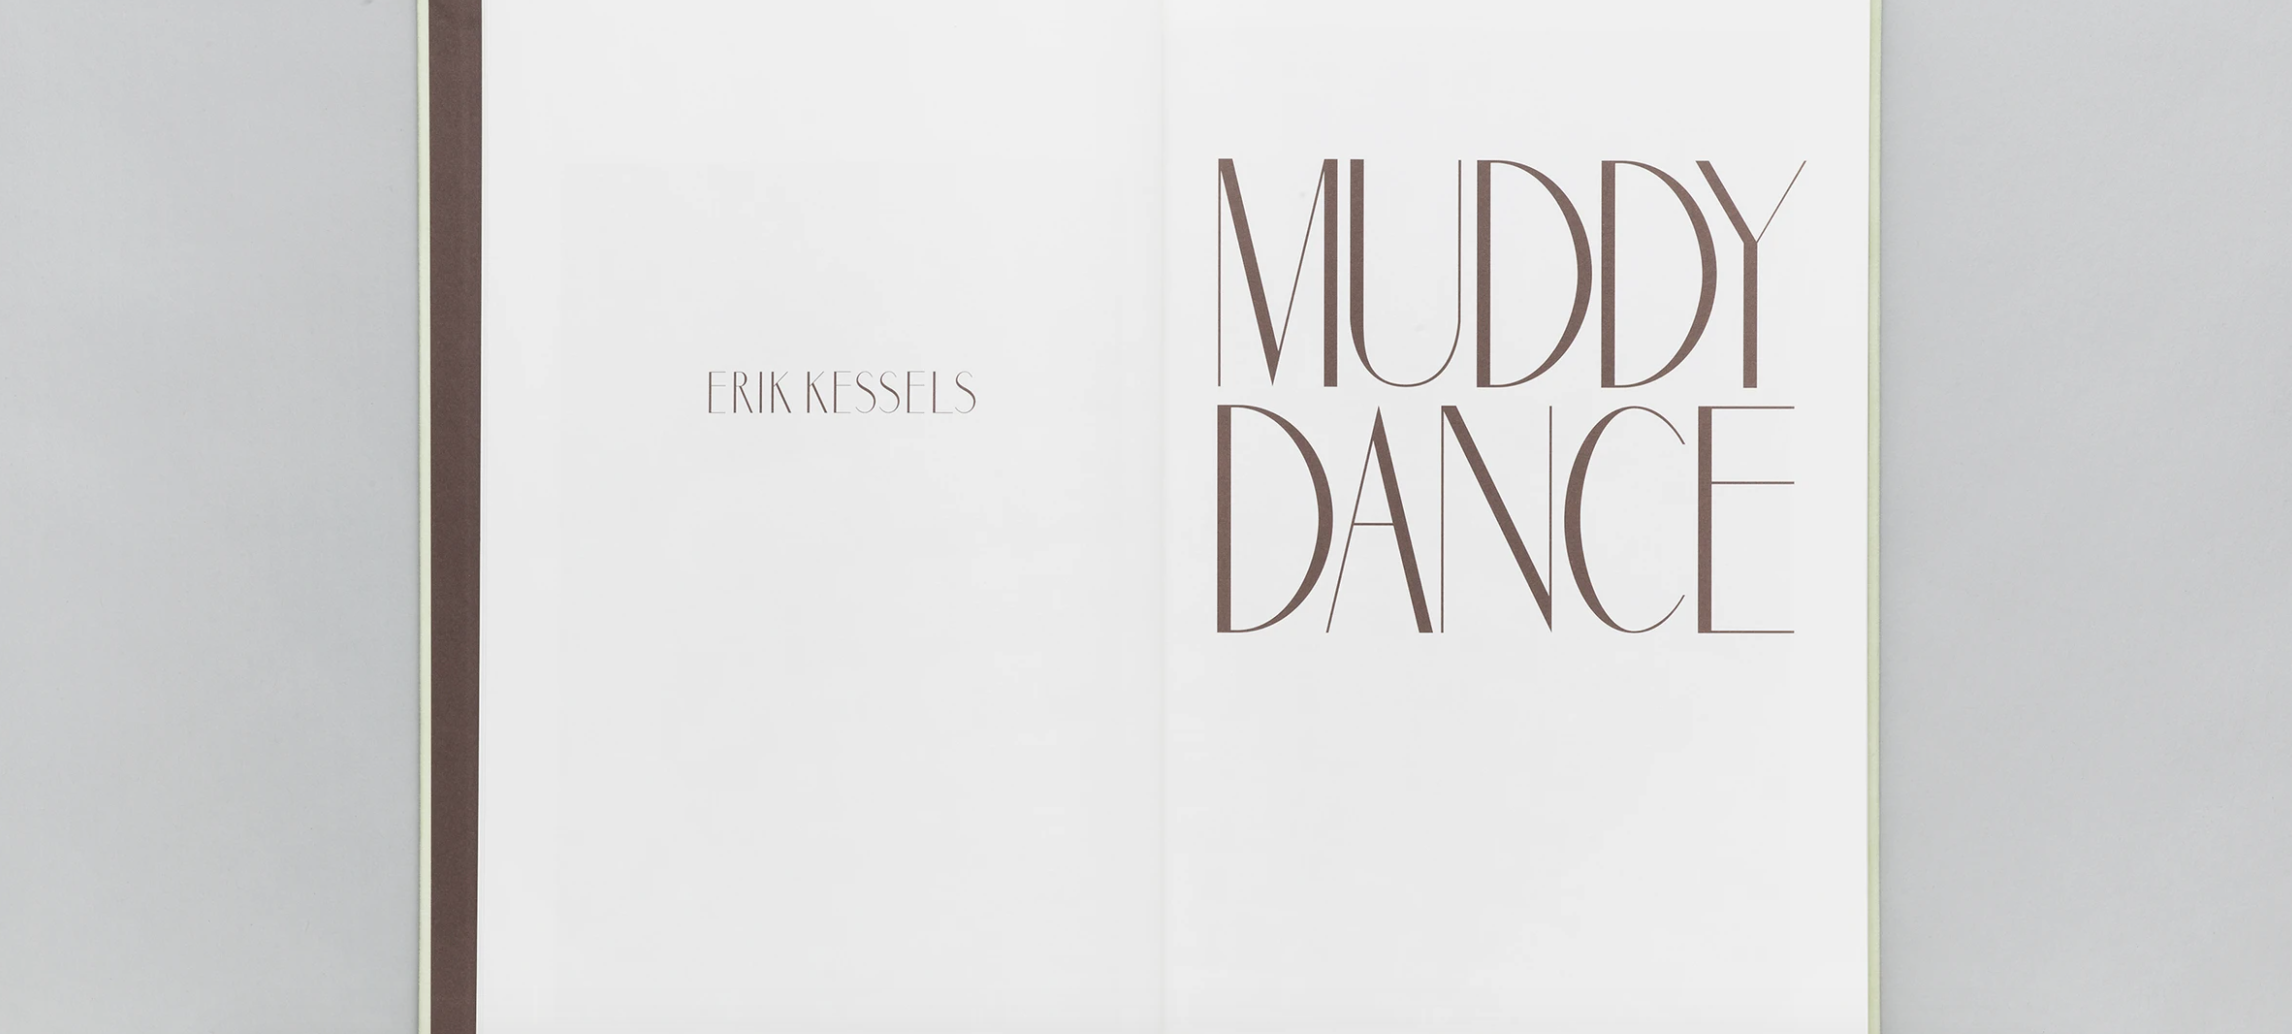 Erik Kessels, MUDDY DANCE RVB books